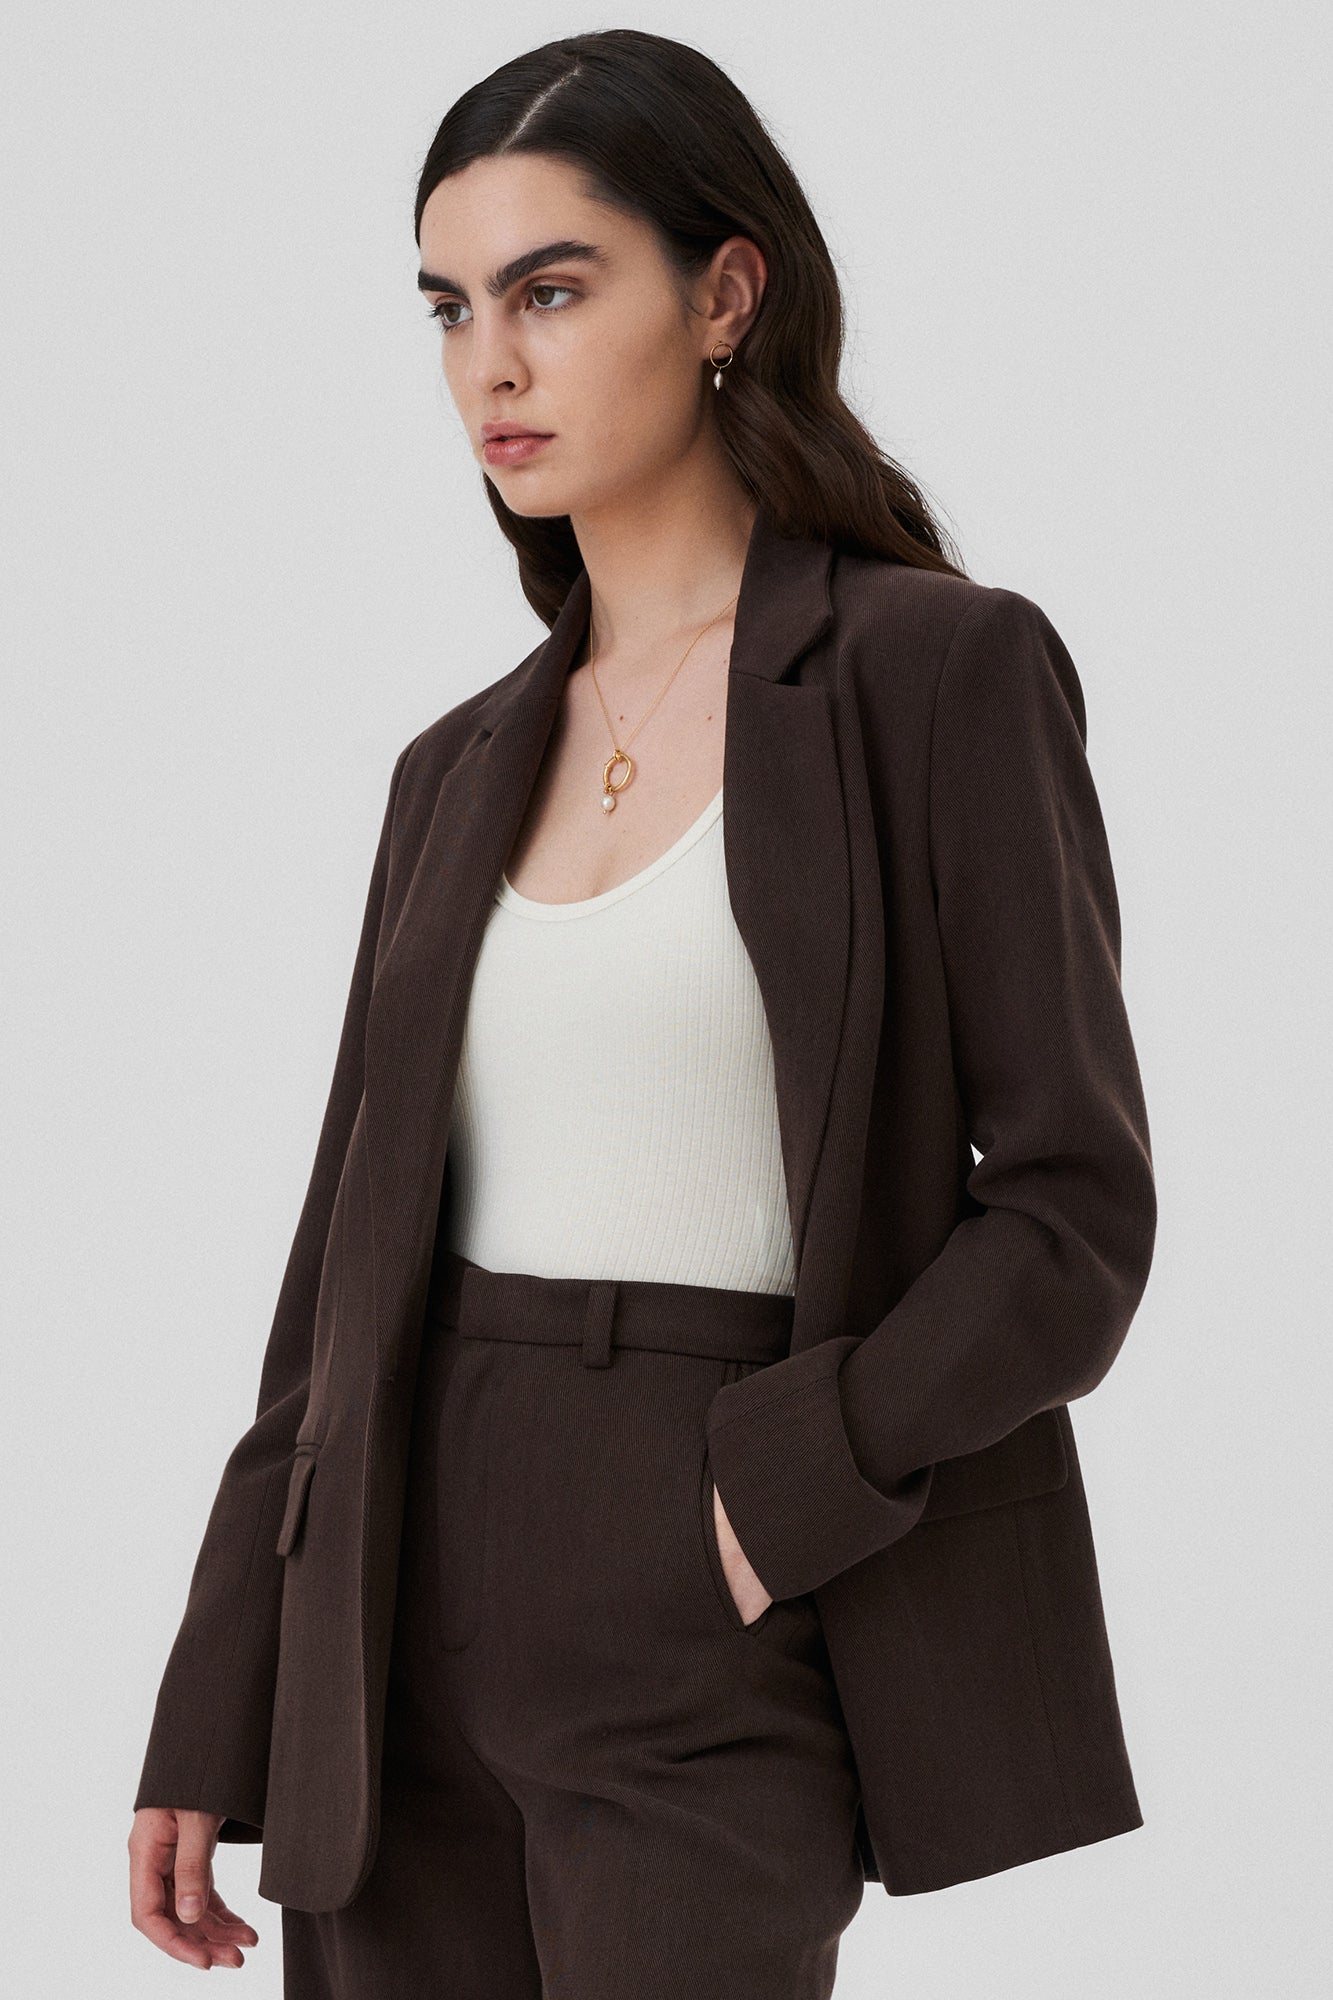 Blazer jacket in Tencel™ / 18 / 04 / dark chocolate *bodysuit-in-organic-cotton-01-10-cream-white,tencel-trousers-05-05-dark-chocolate* ?The model is 172cm tall and wears size S? |